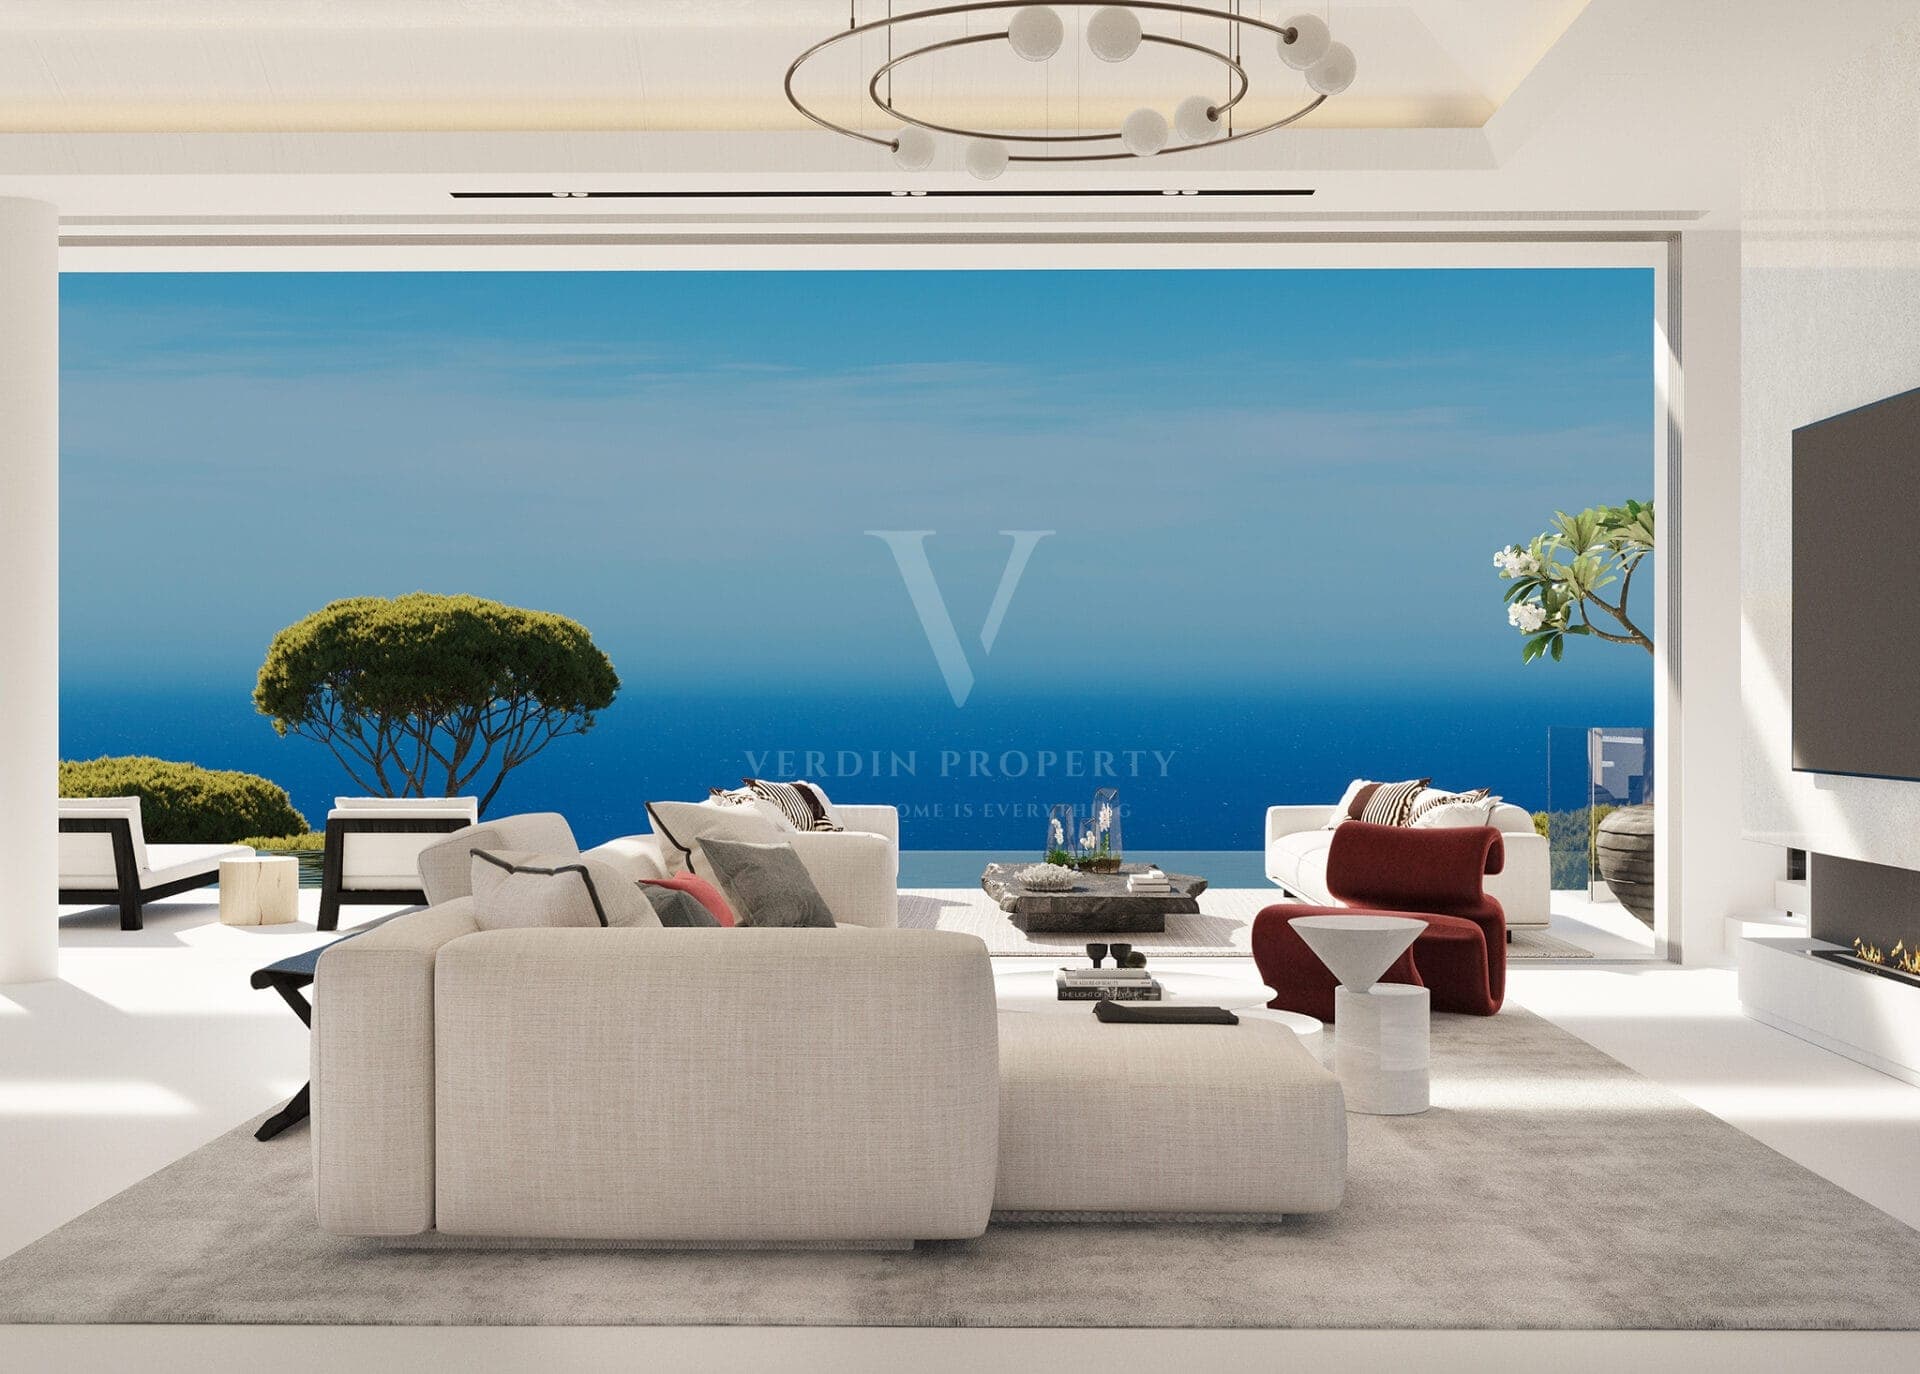 Vista Lago Residences - Verdin Property - New Development Marbella